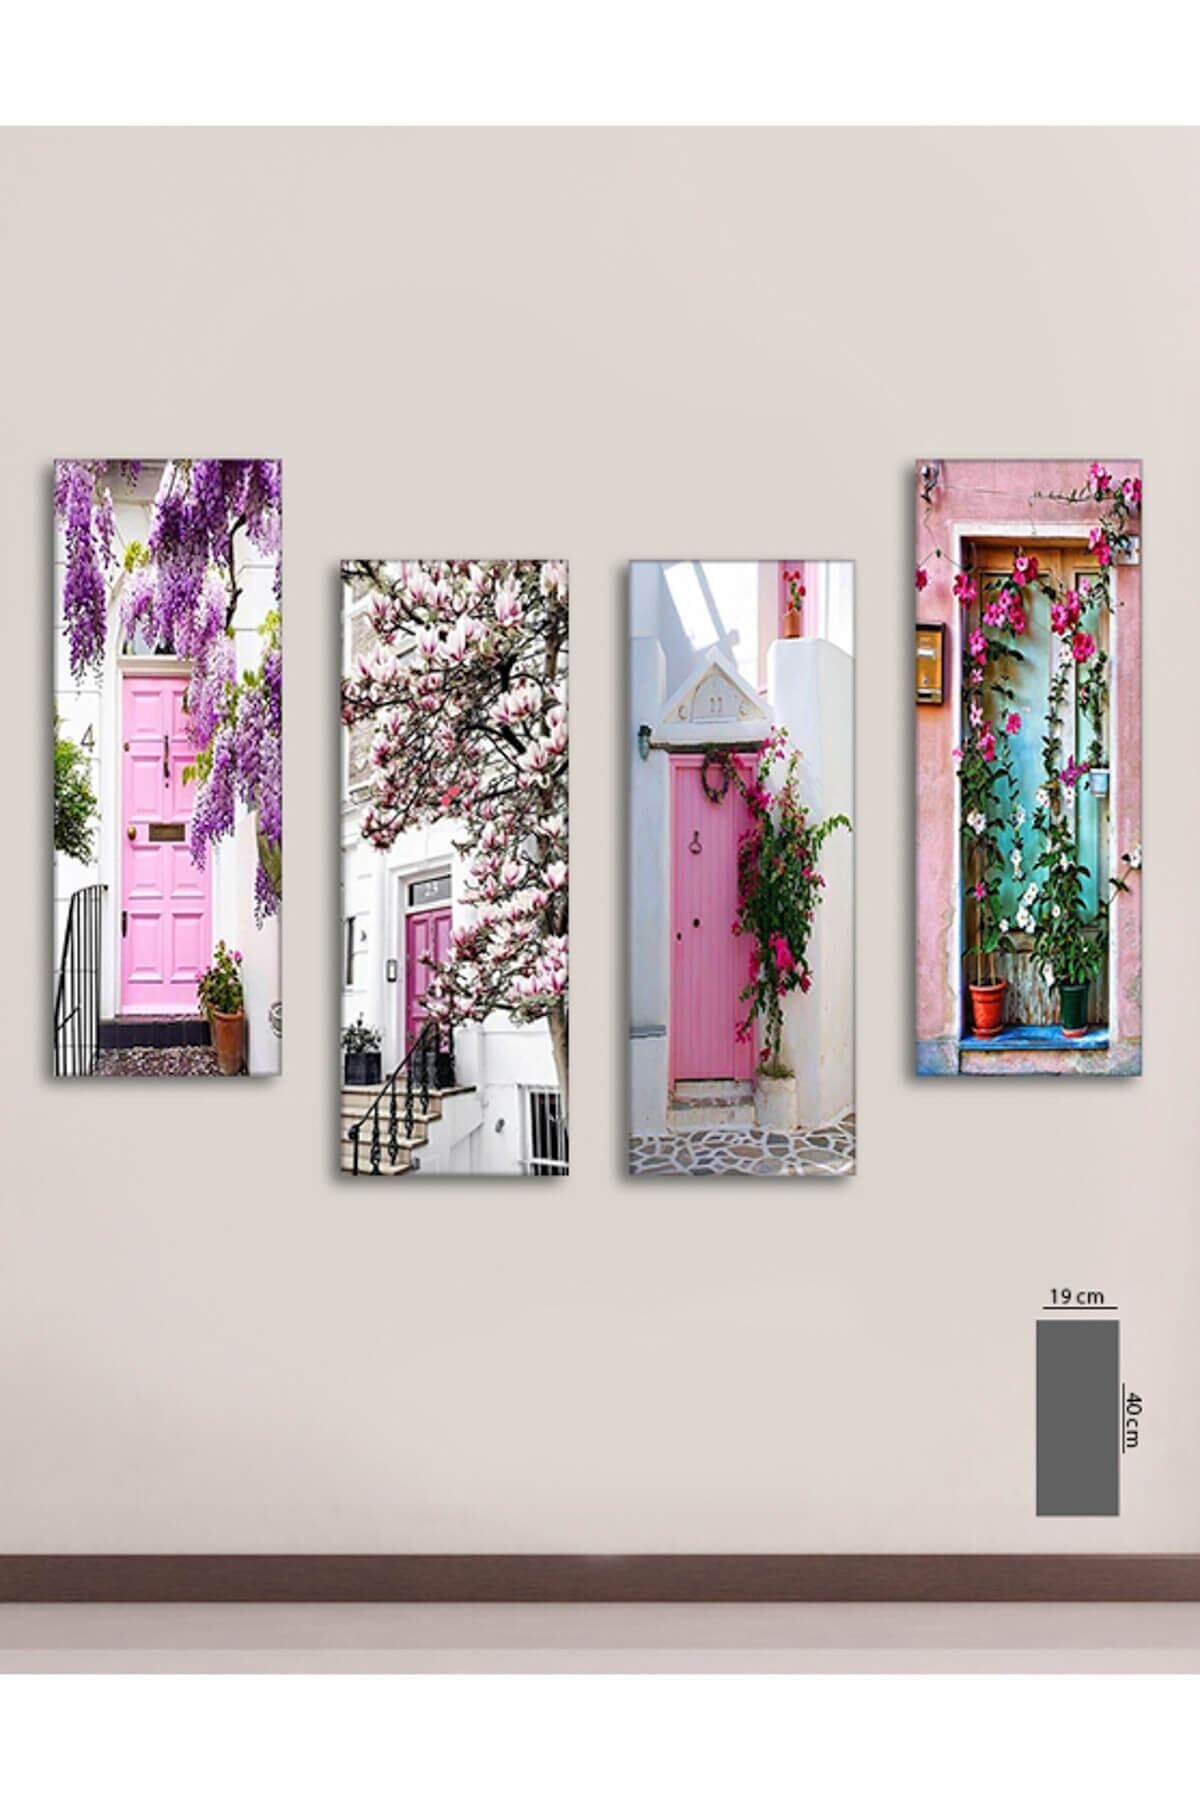 Evimona 4 Parça Çiçekli Kapılar Alaçatı Mdf Tablo - T-4dikey-02 / 19x40